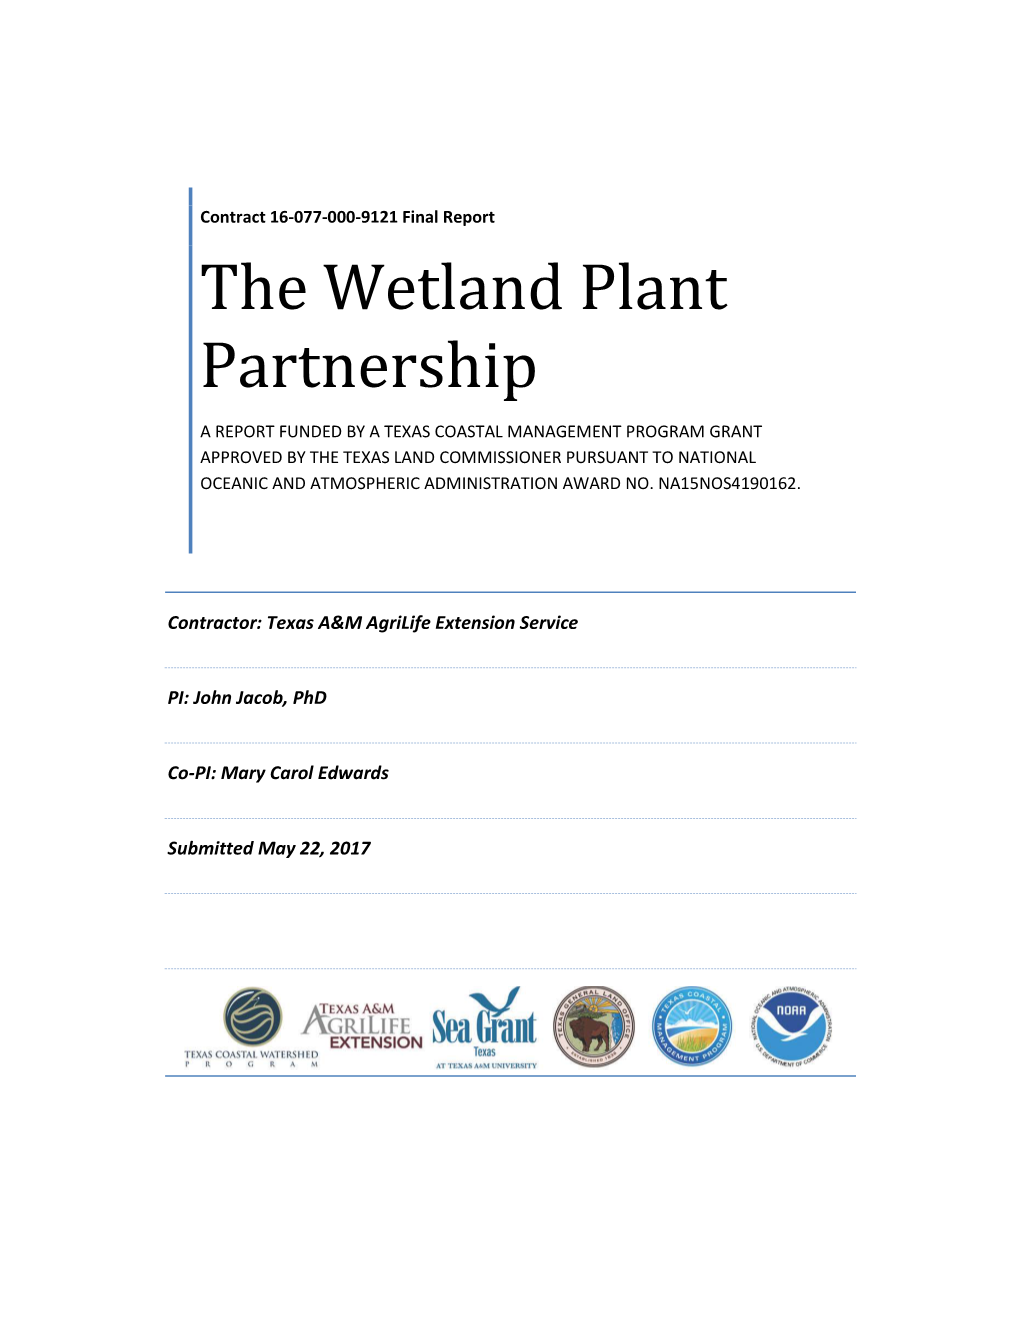 The Wetland Plant Partnership